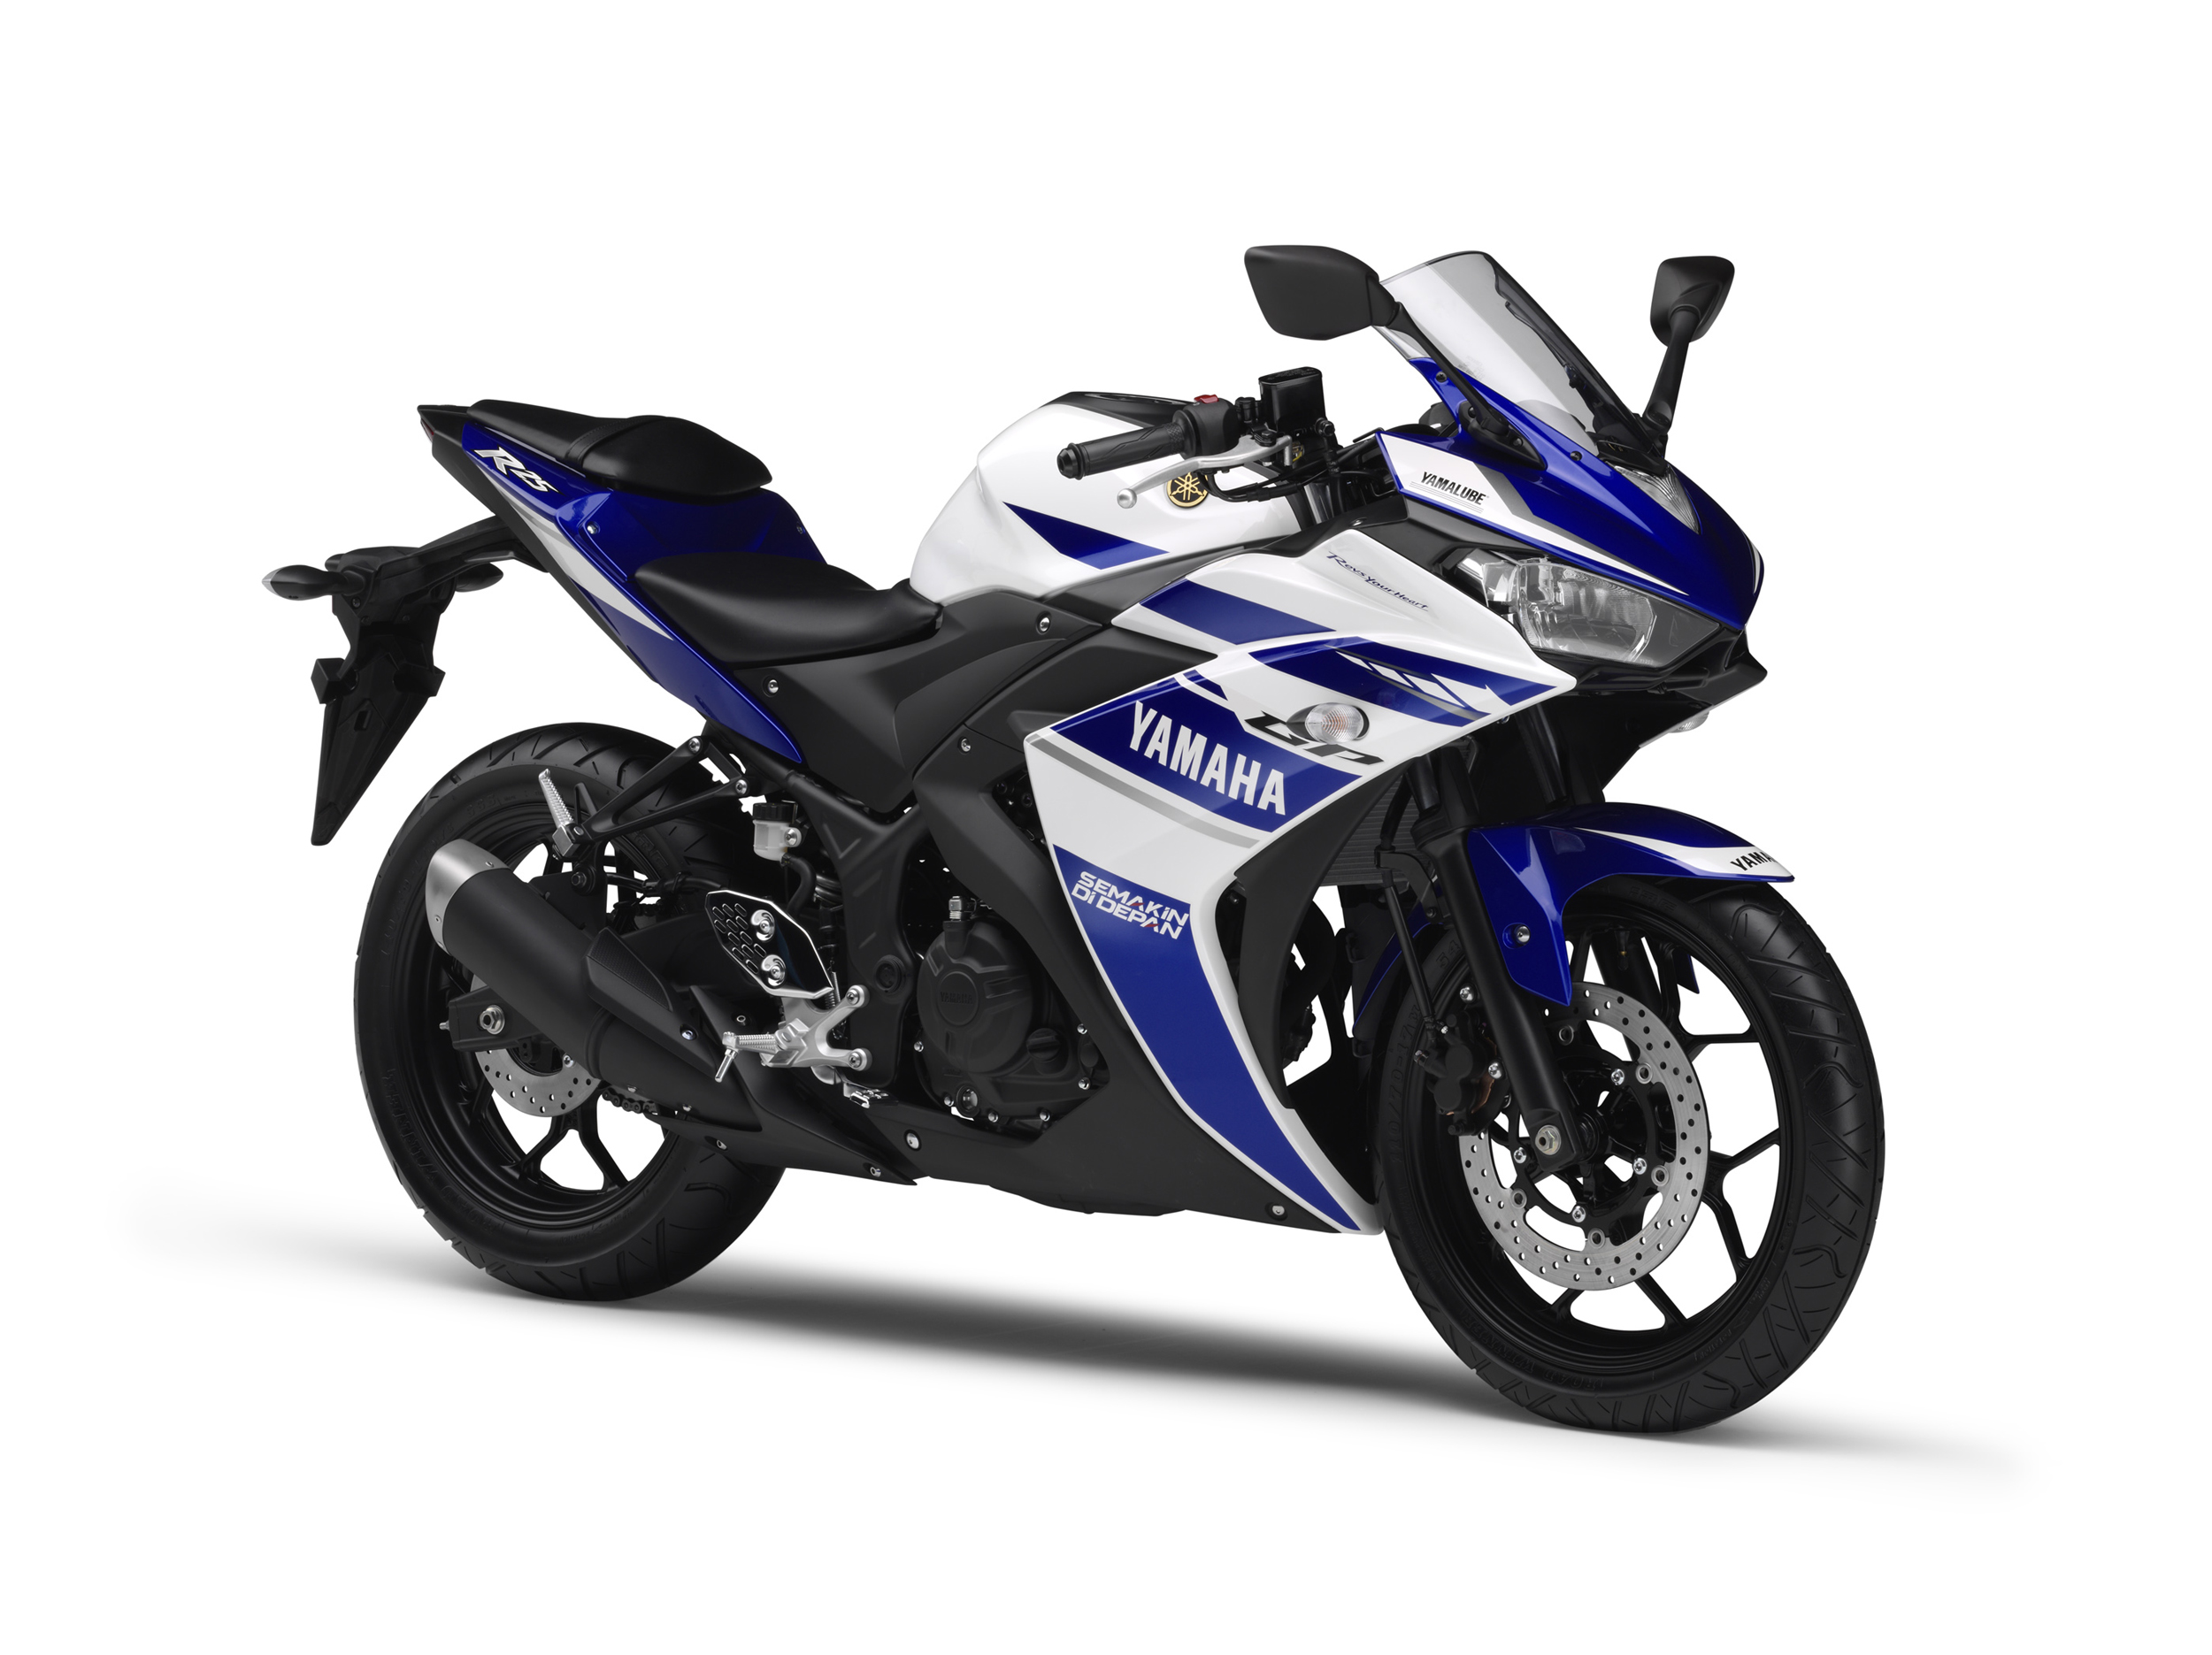 Production Yamaha R25 finally unveiled